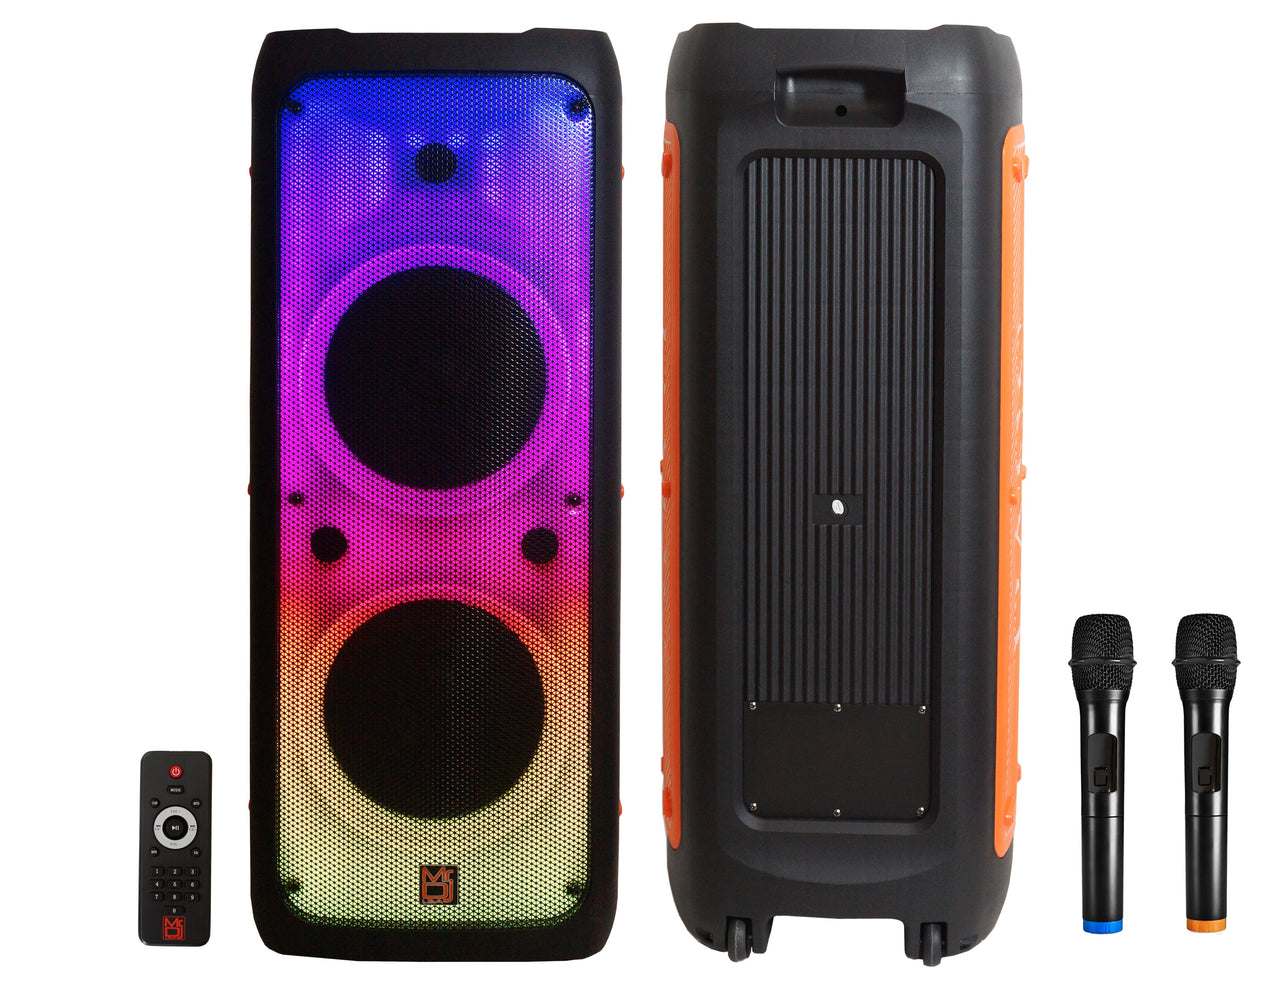 2 MR DJ FLAME5500LED Professional Portable Dual 12” 3-Way Full-Range Powered/Active DJ PA Multipurpose Live Sound Bluetooth Loudspeaker